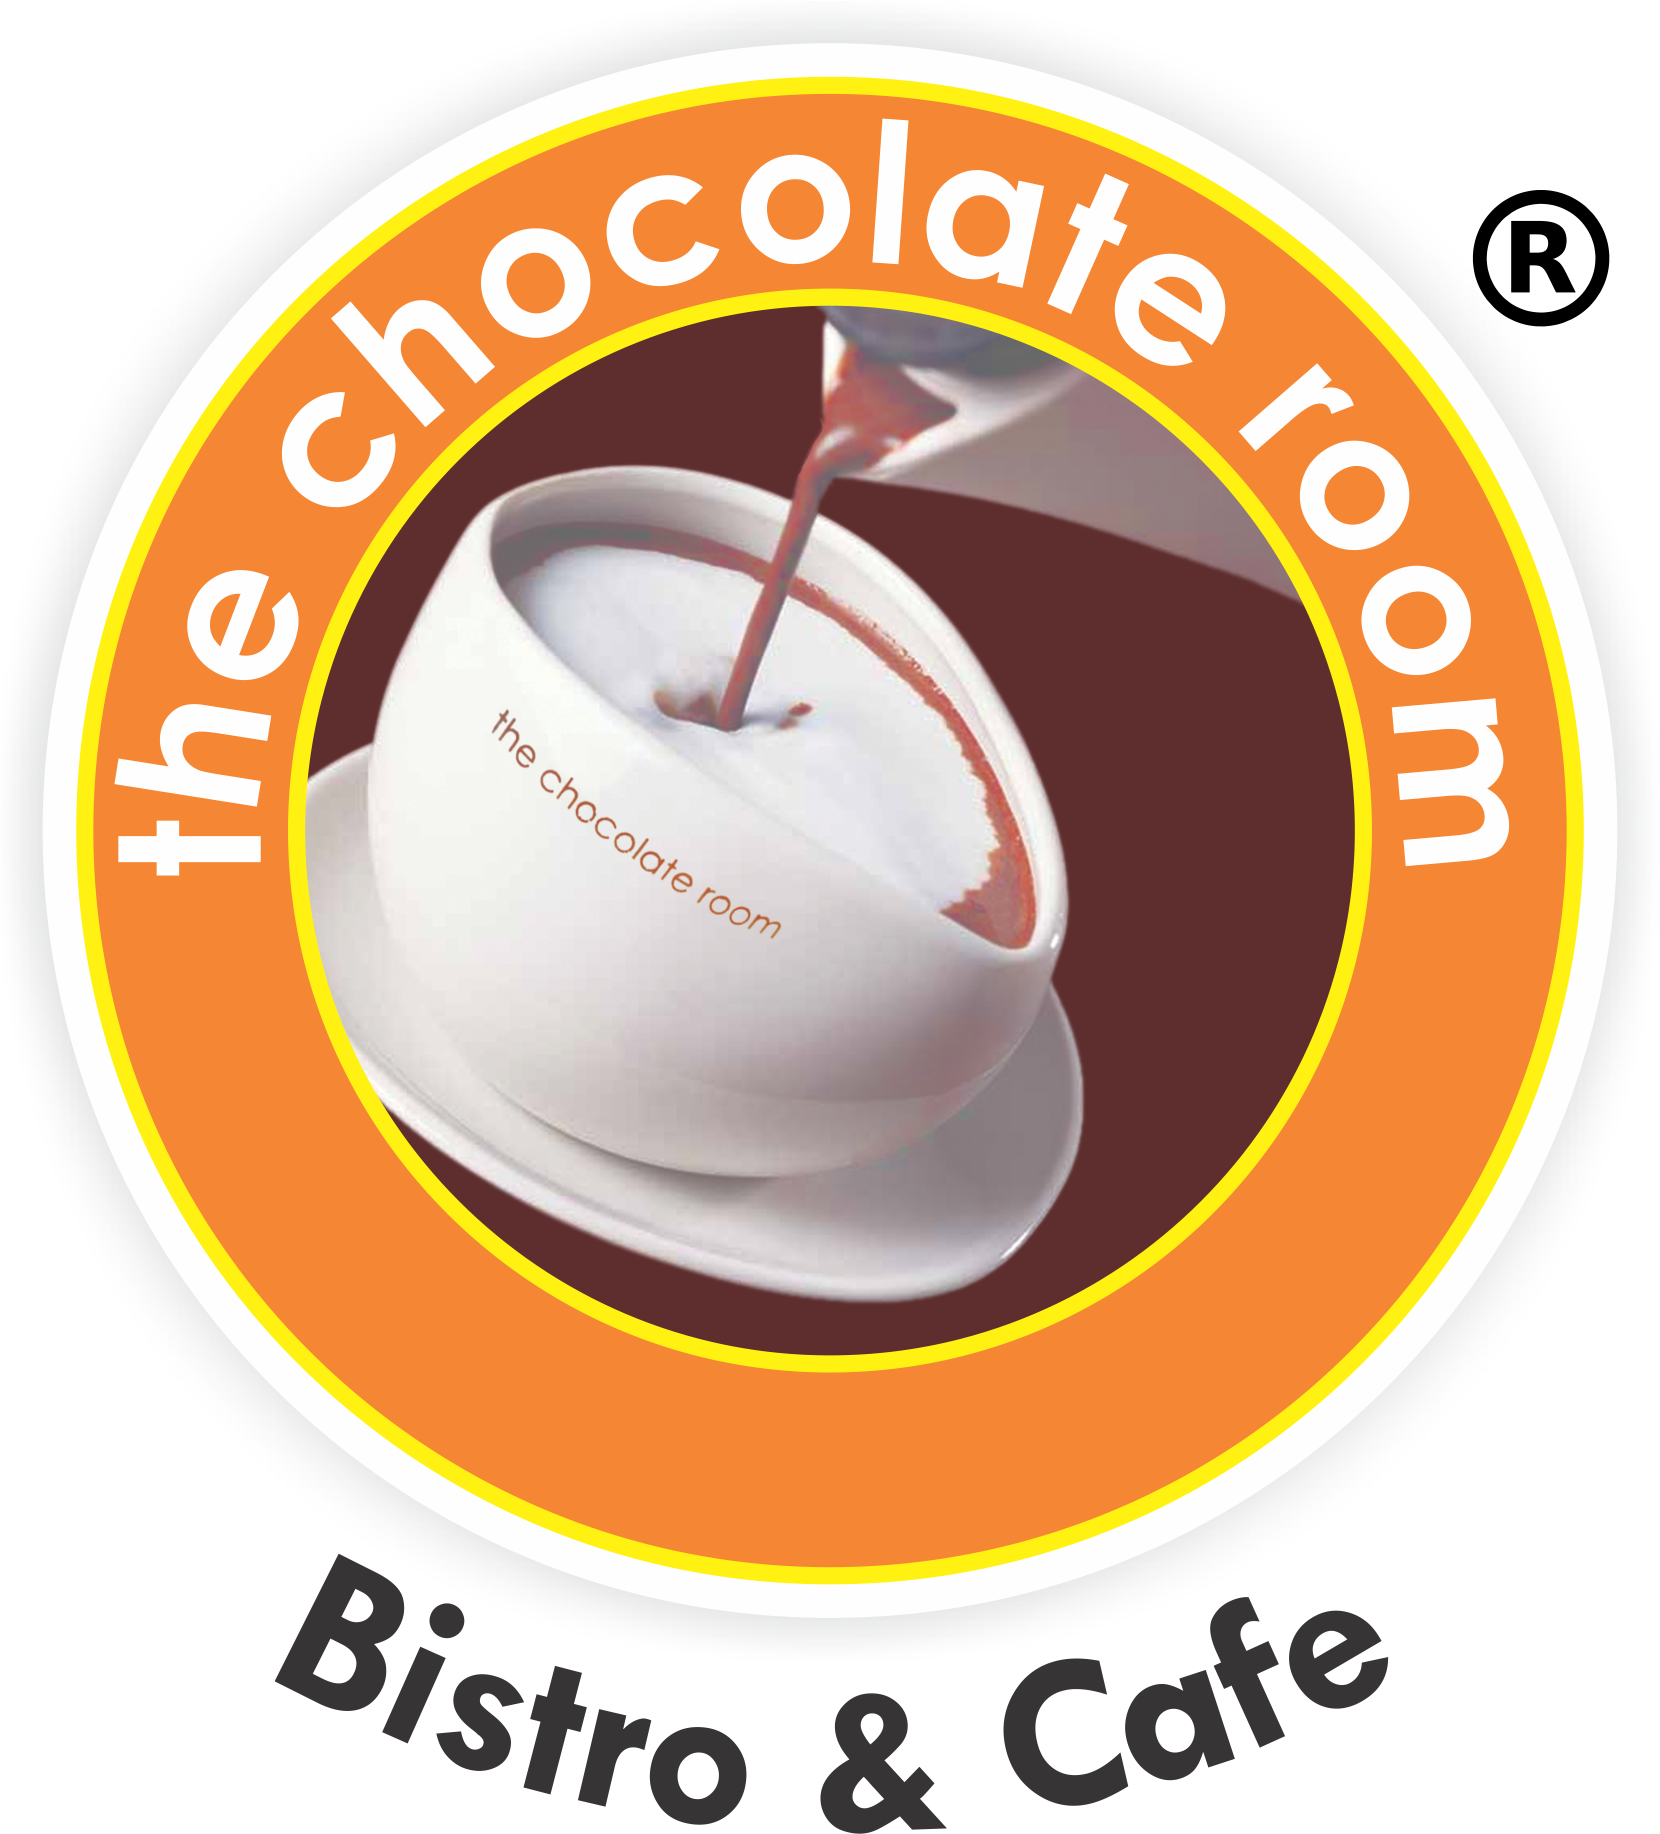 The Chocolate Room India Pvt. Ltd. logo